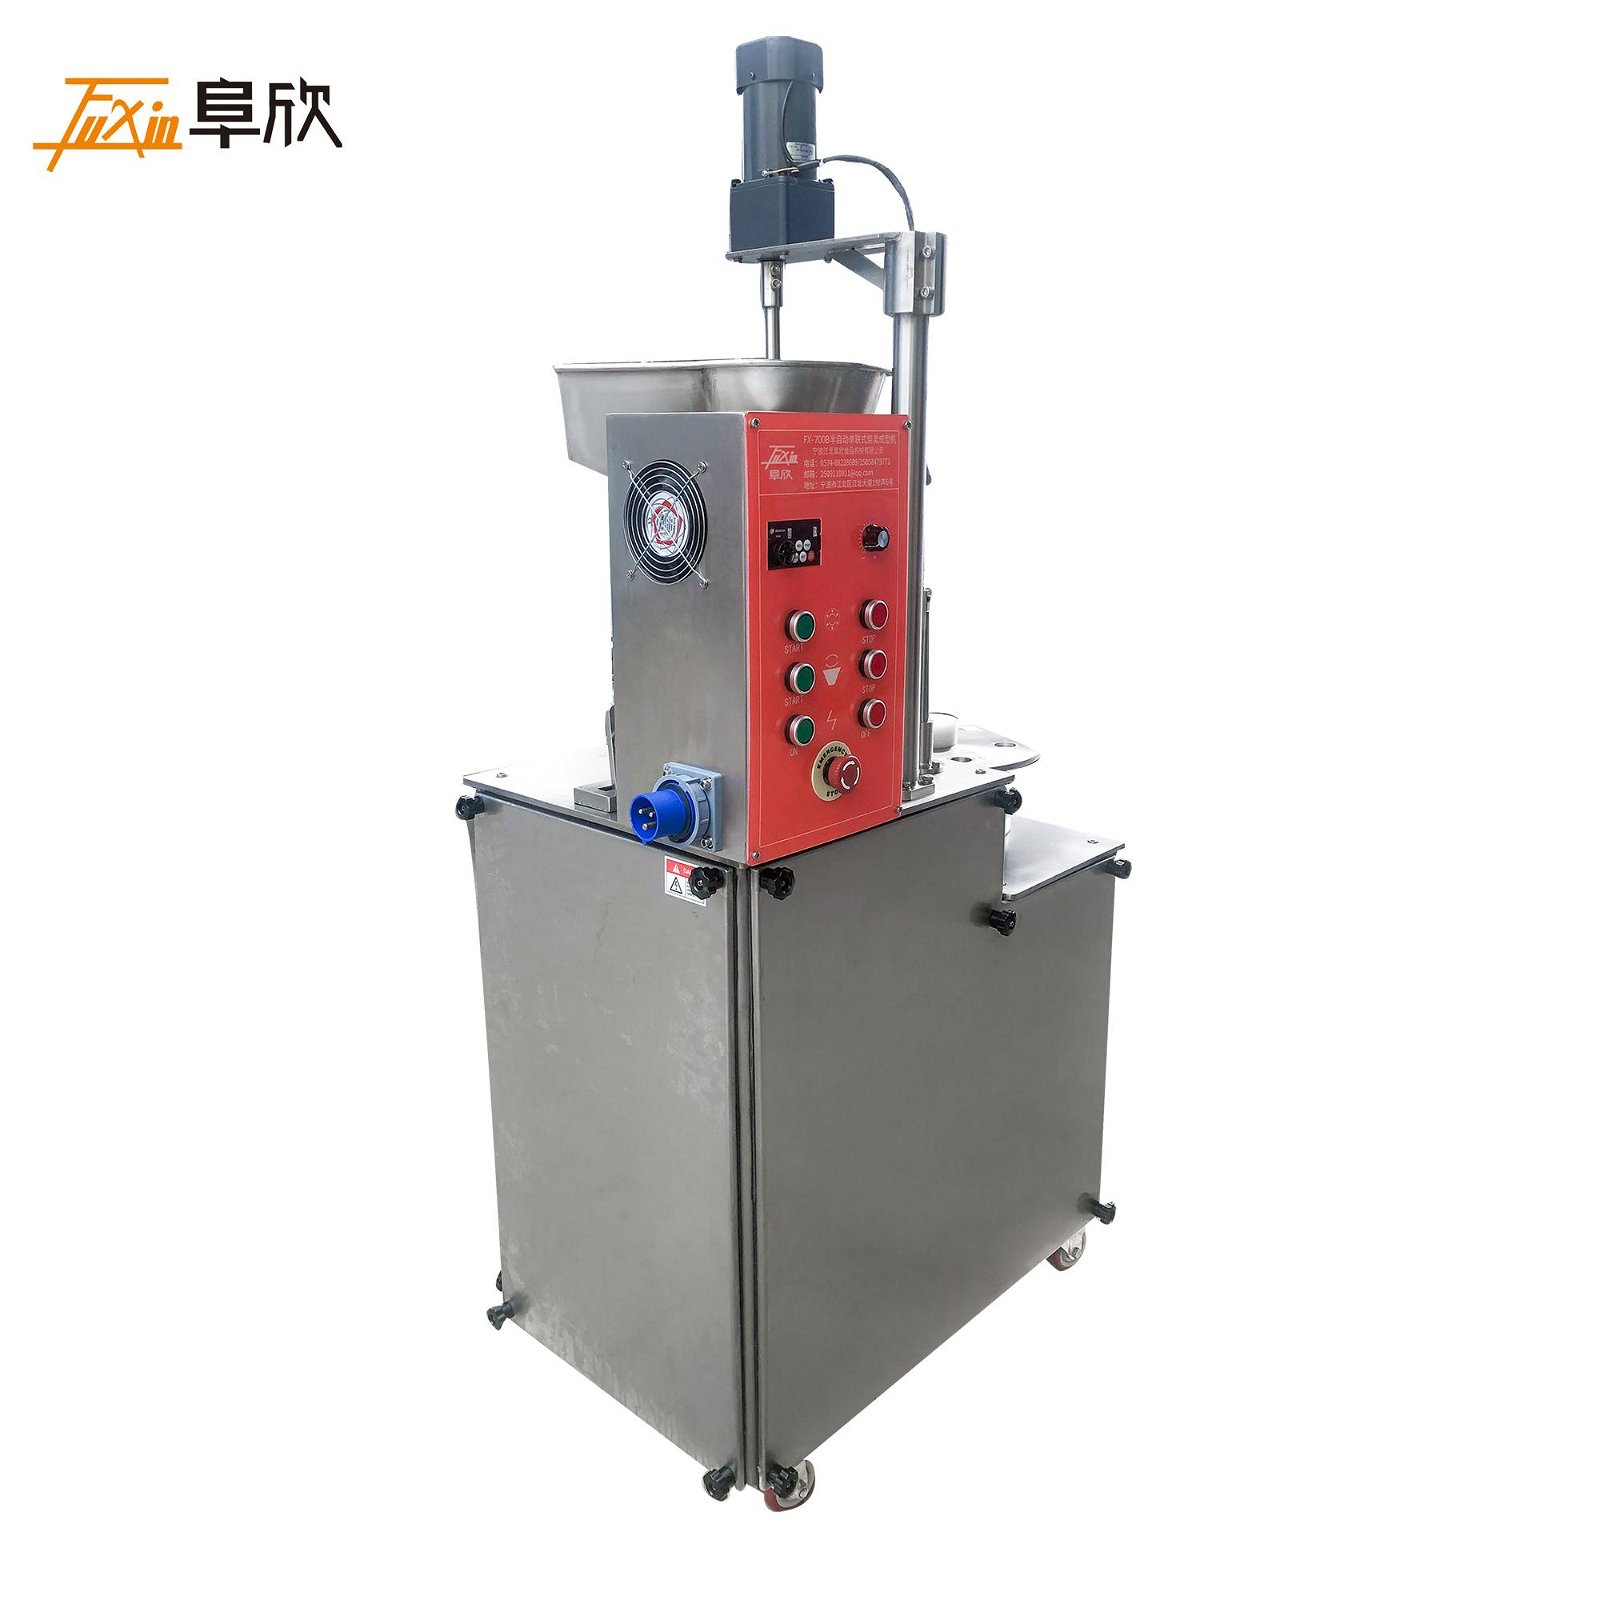 FX-700 semi-automatic steaming machine 2